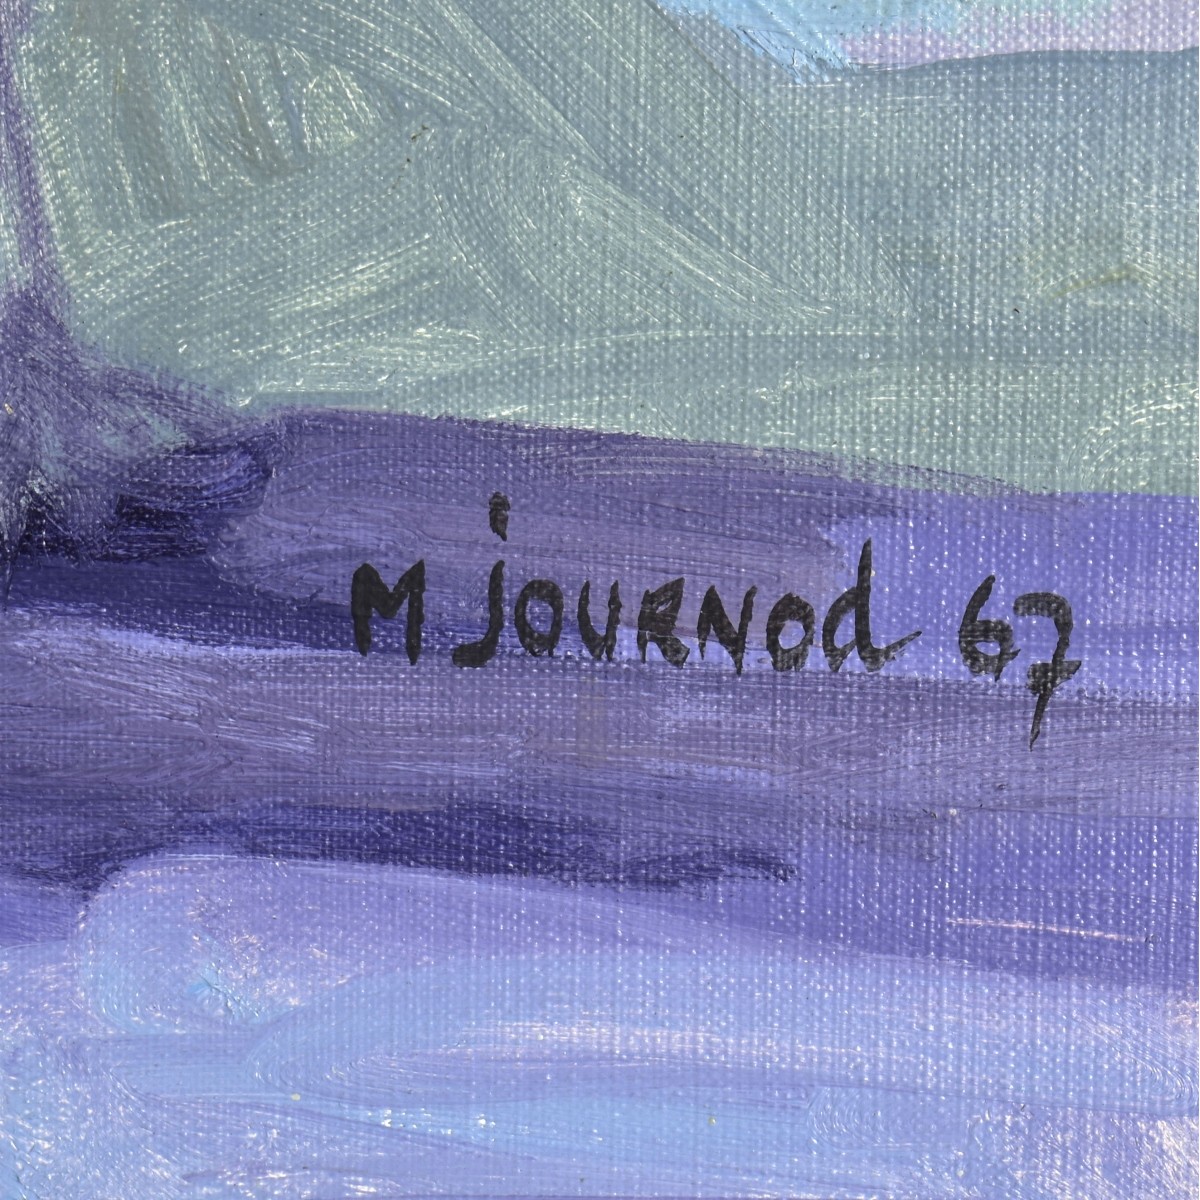 Monique Journod, French (Born 1935)